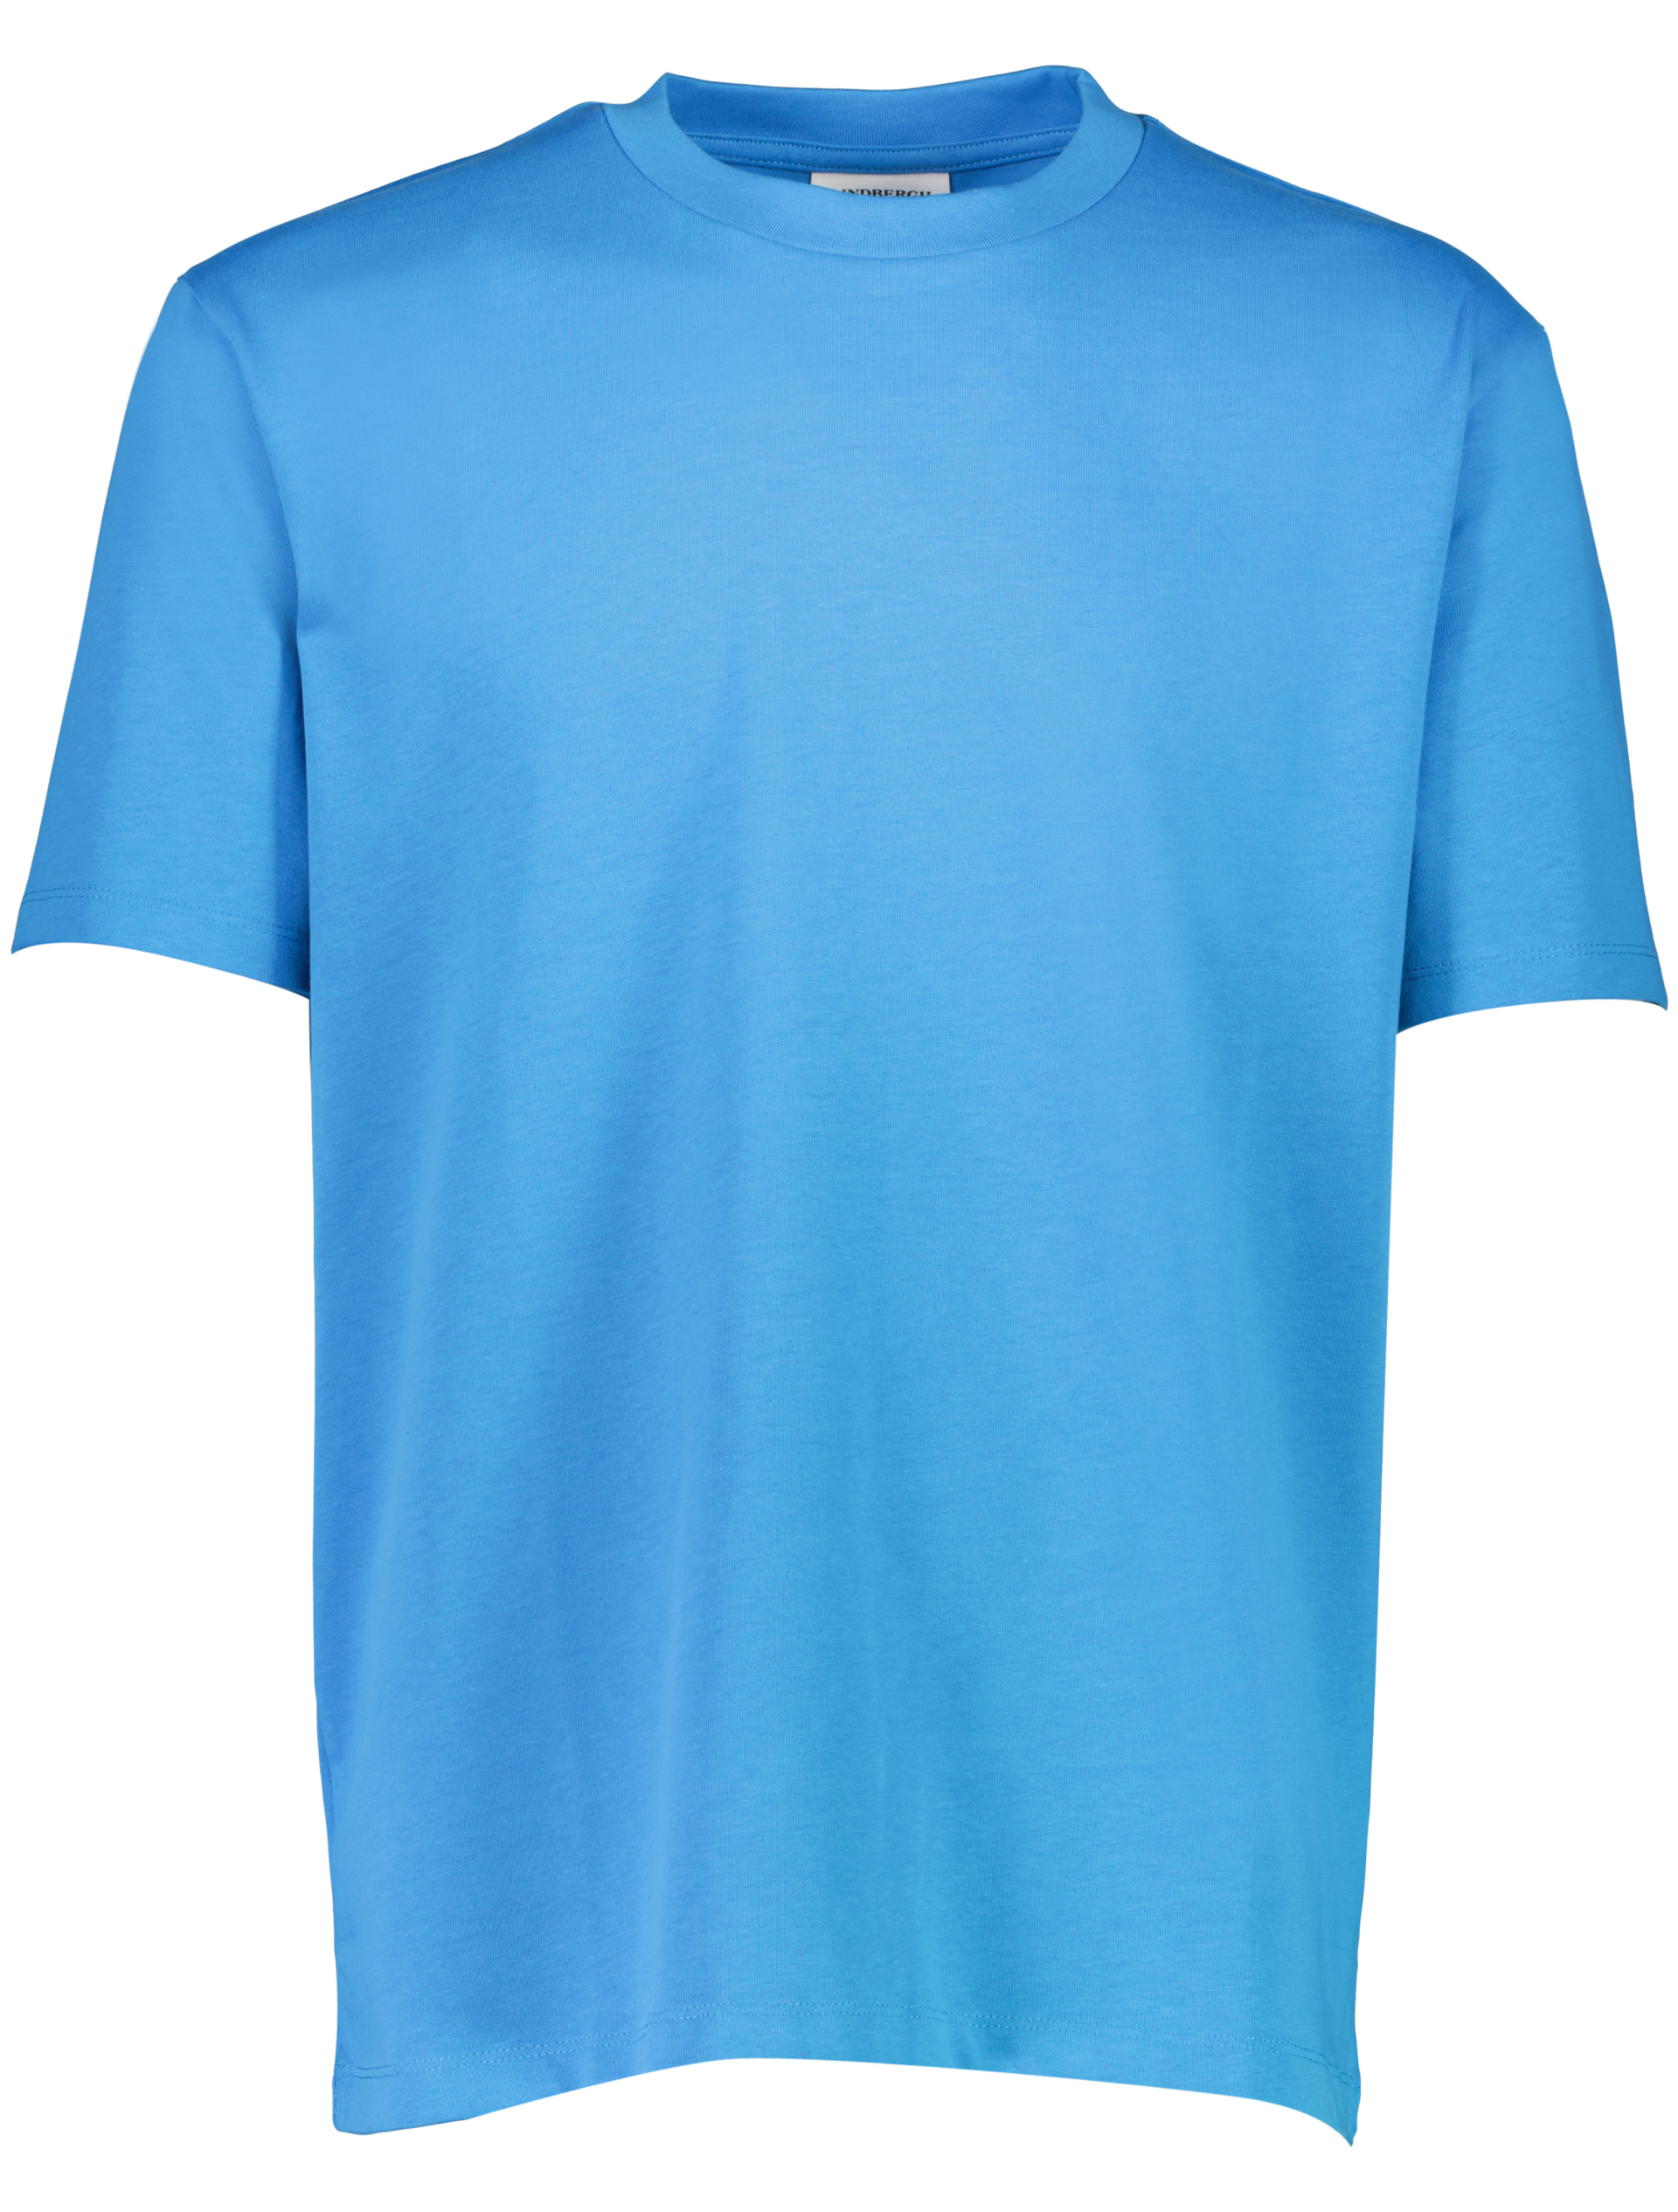 Lindbergh T-shirt blau / bright blue